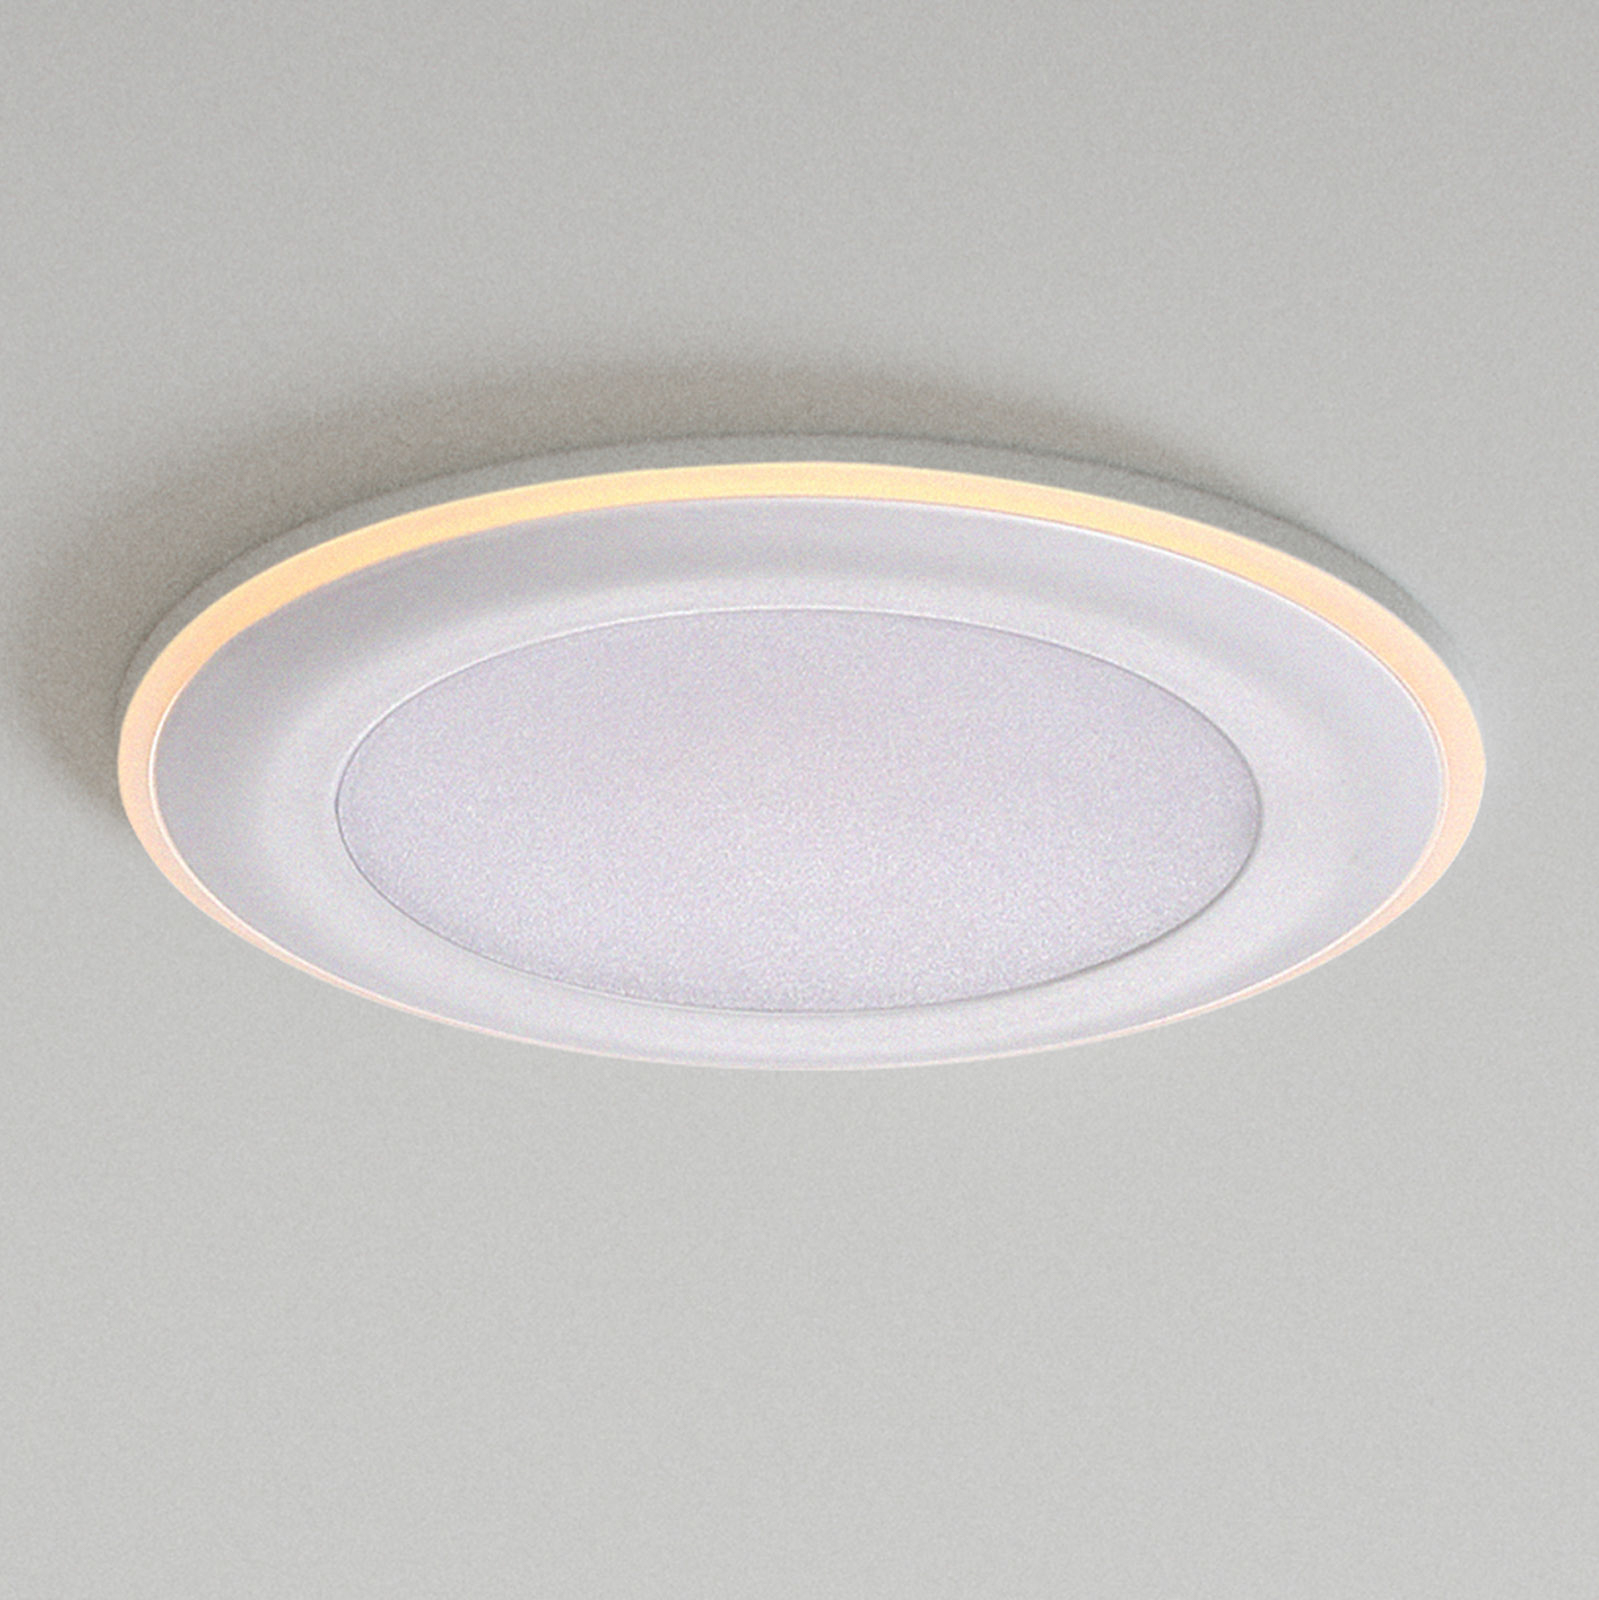 Onderbreking Handelsmerk uitsterven LED plafond inbouwlamp Elkton | Lampen24.be